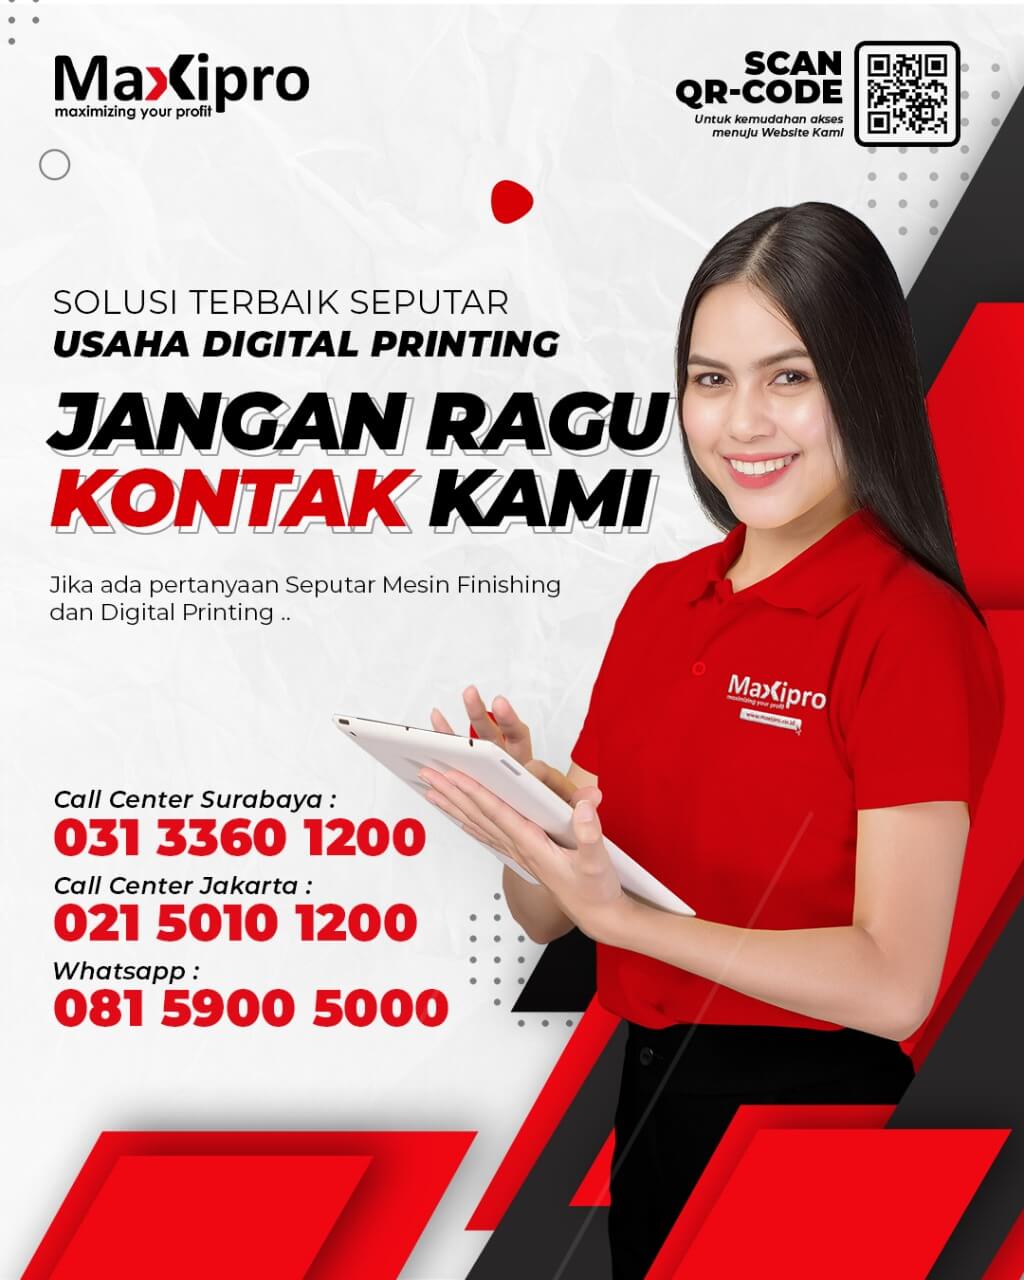 Contact Call Center Maxipro Surabaya Jakarta